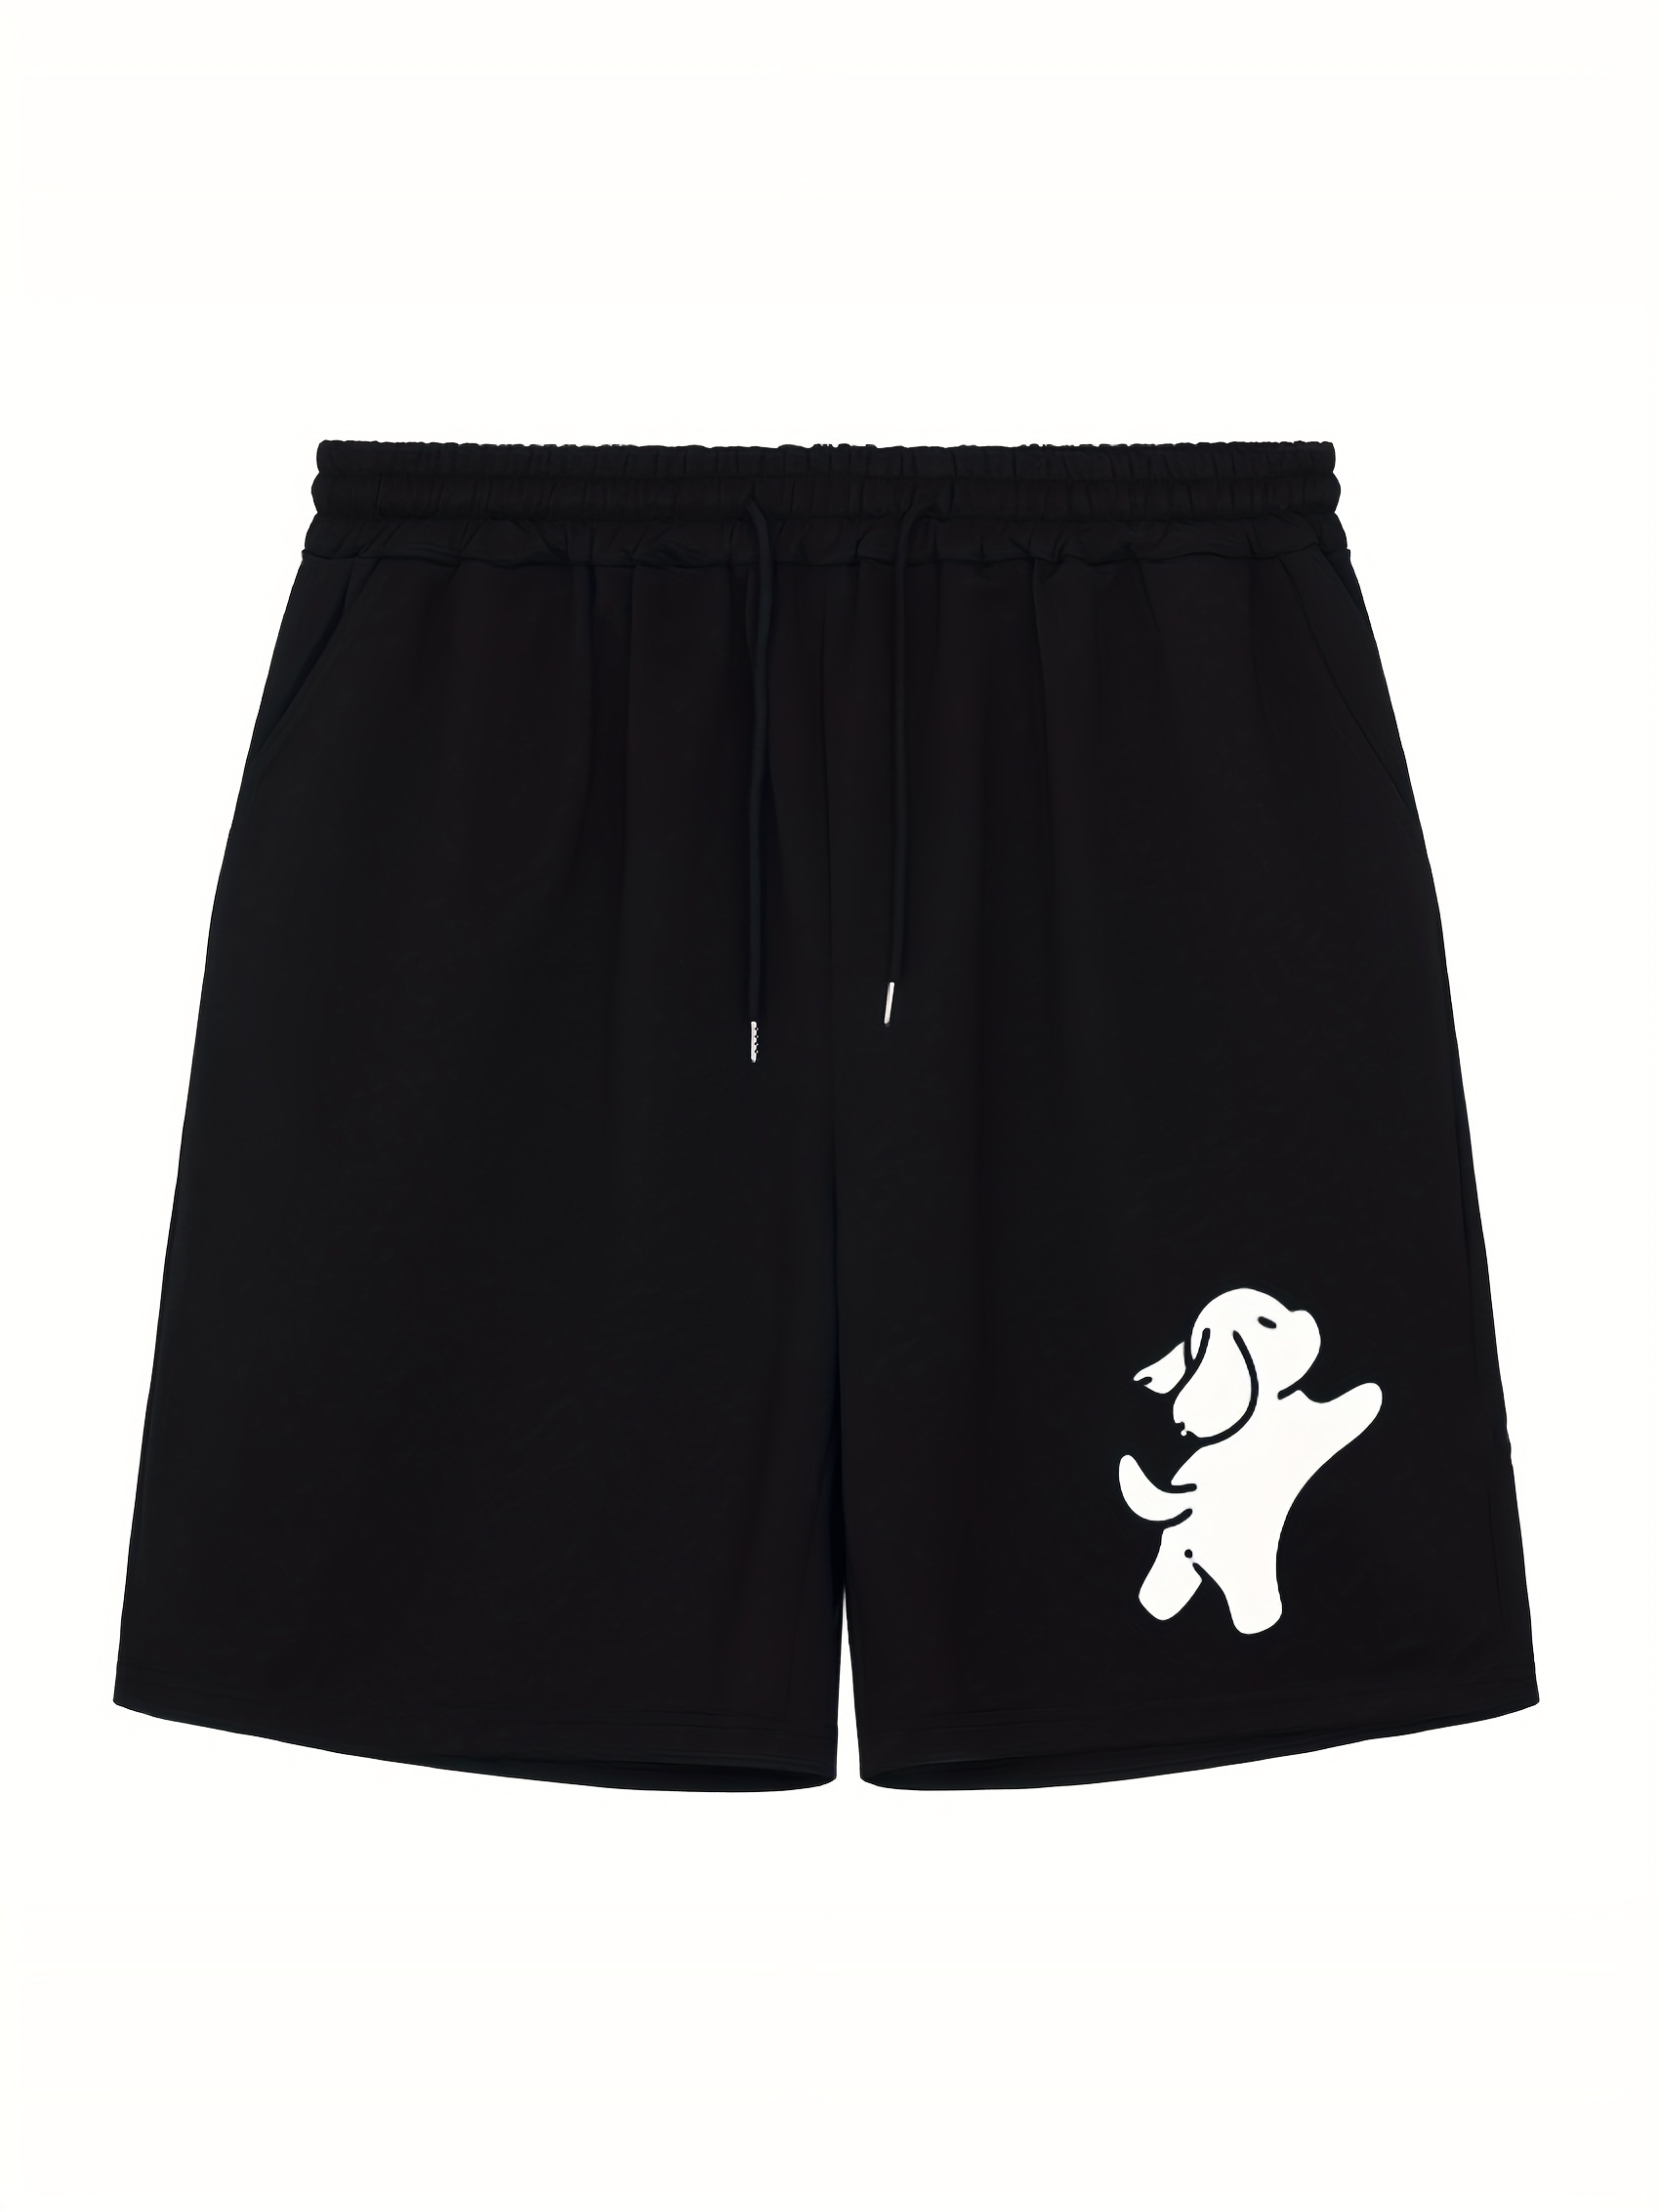  Cute Black White Animal Paw Print Running Shorts for